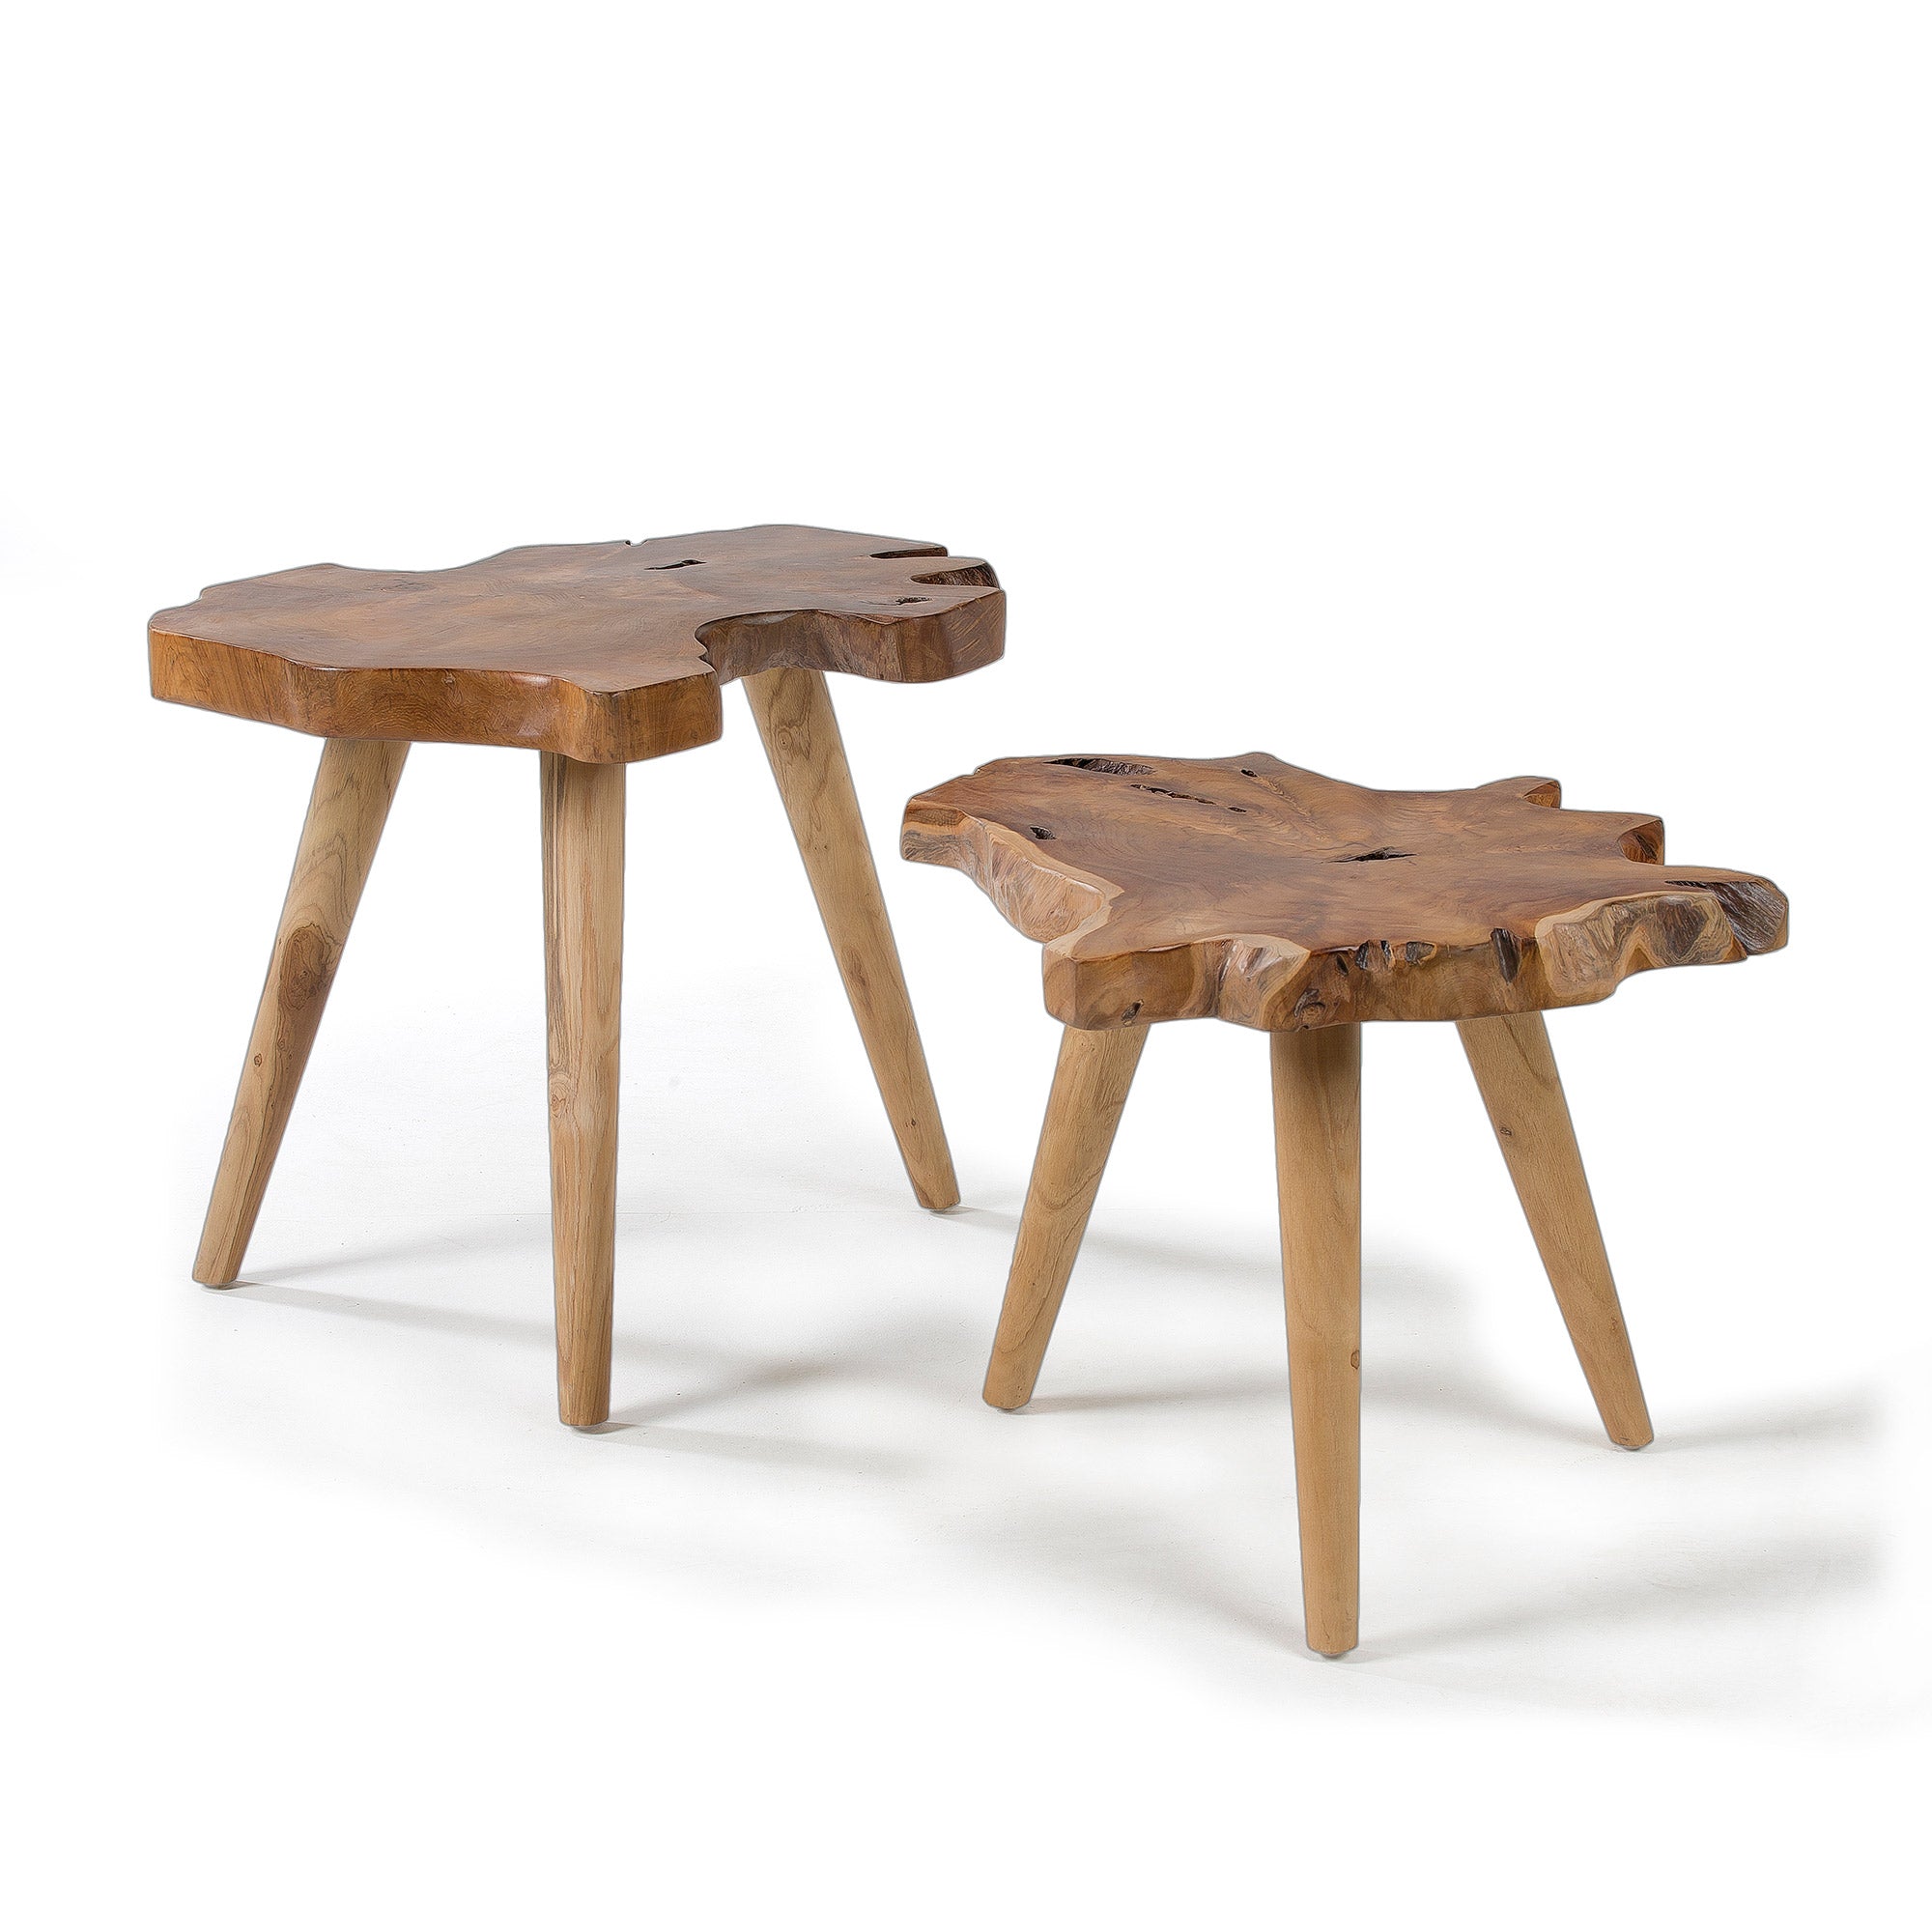 Hattie set of 2 solid teak wood side tables, 60 cm / 56 cm